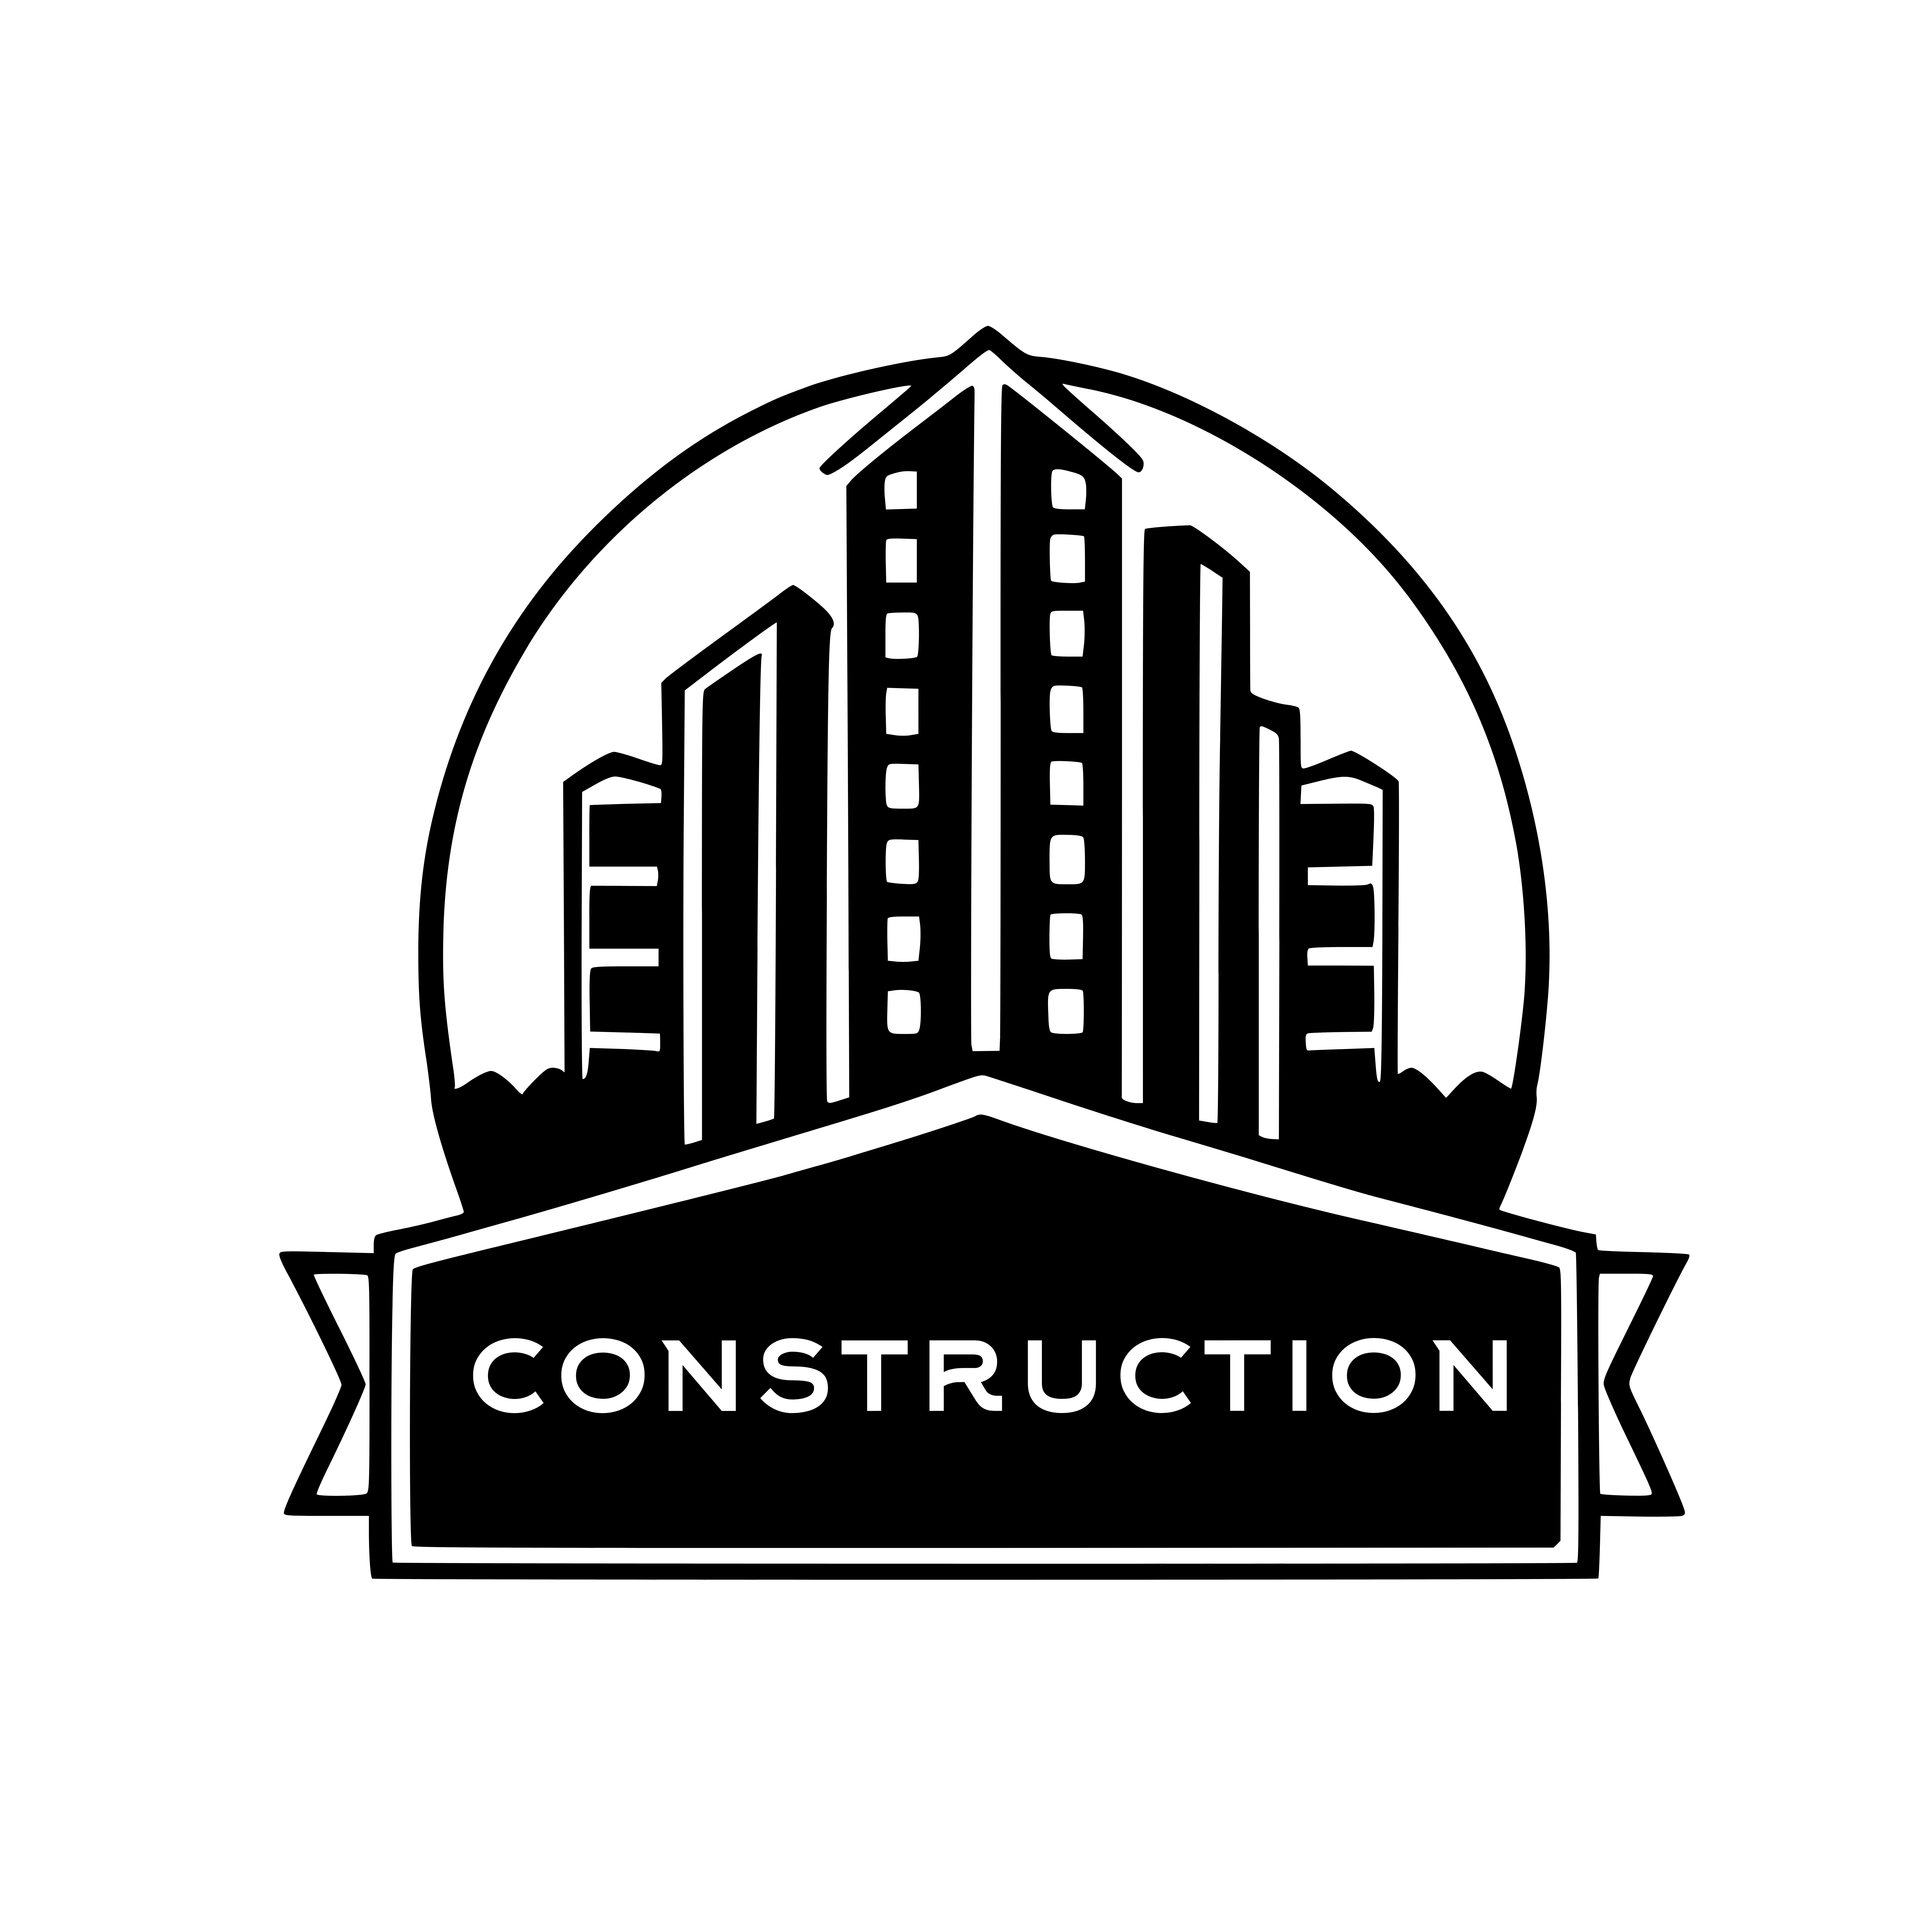 Construction building logo design